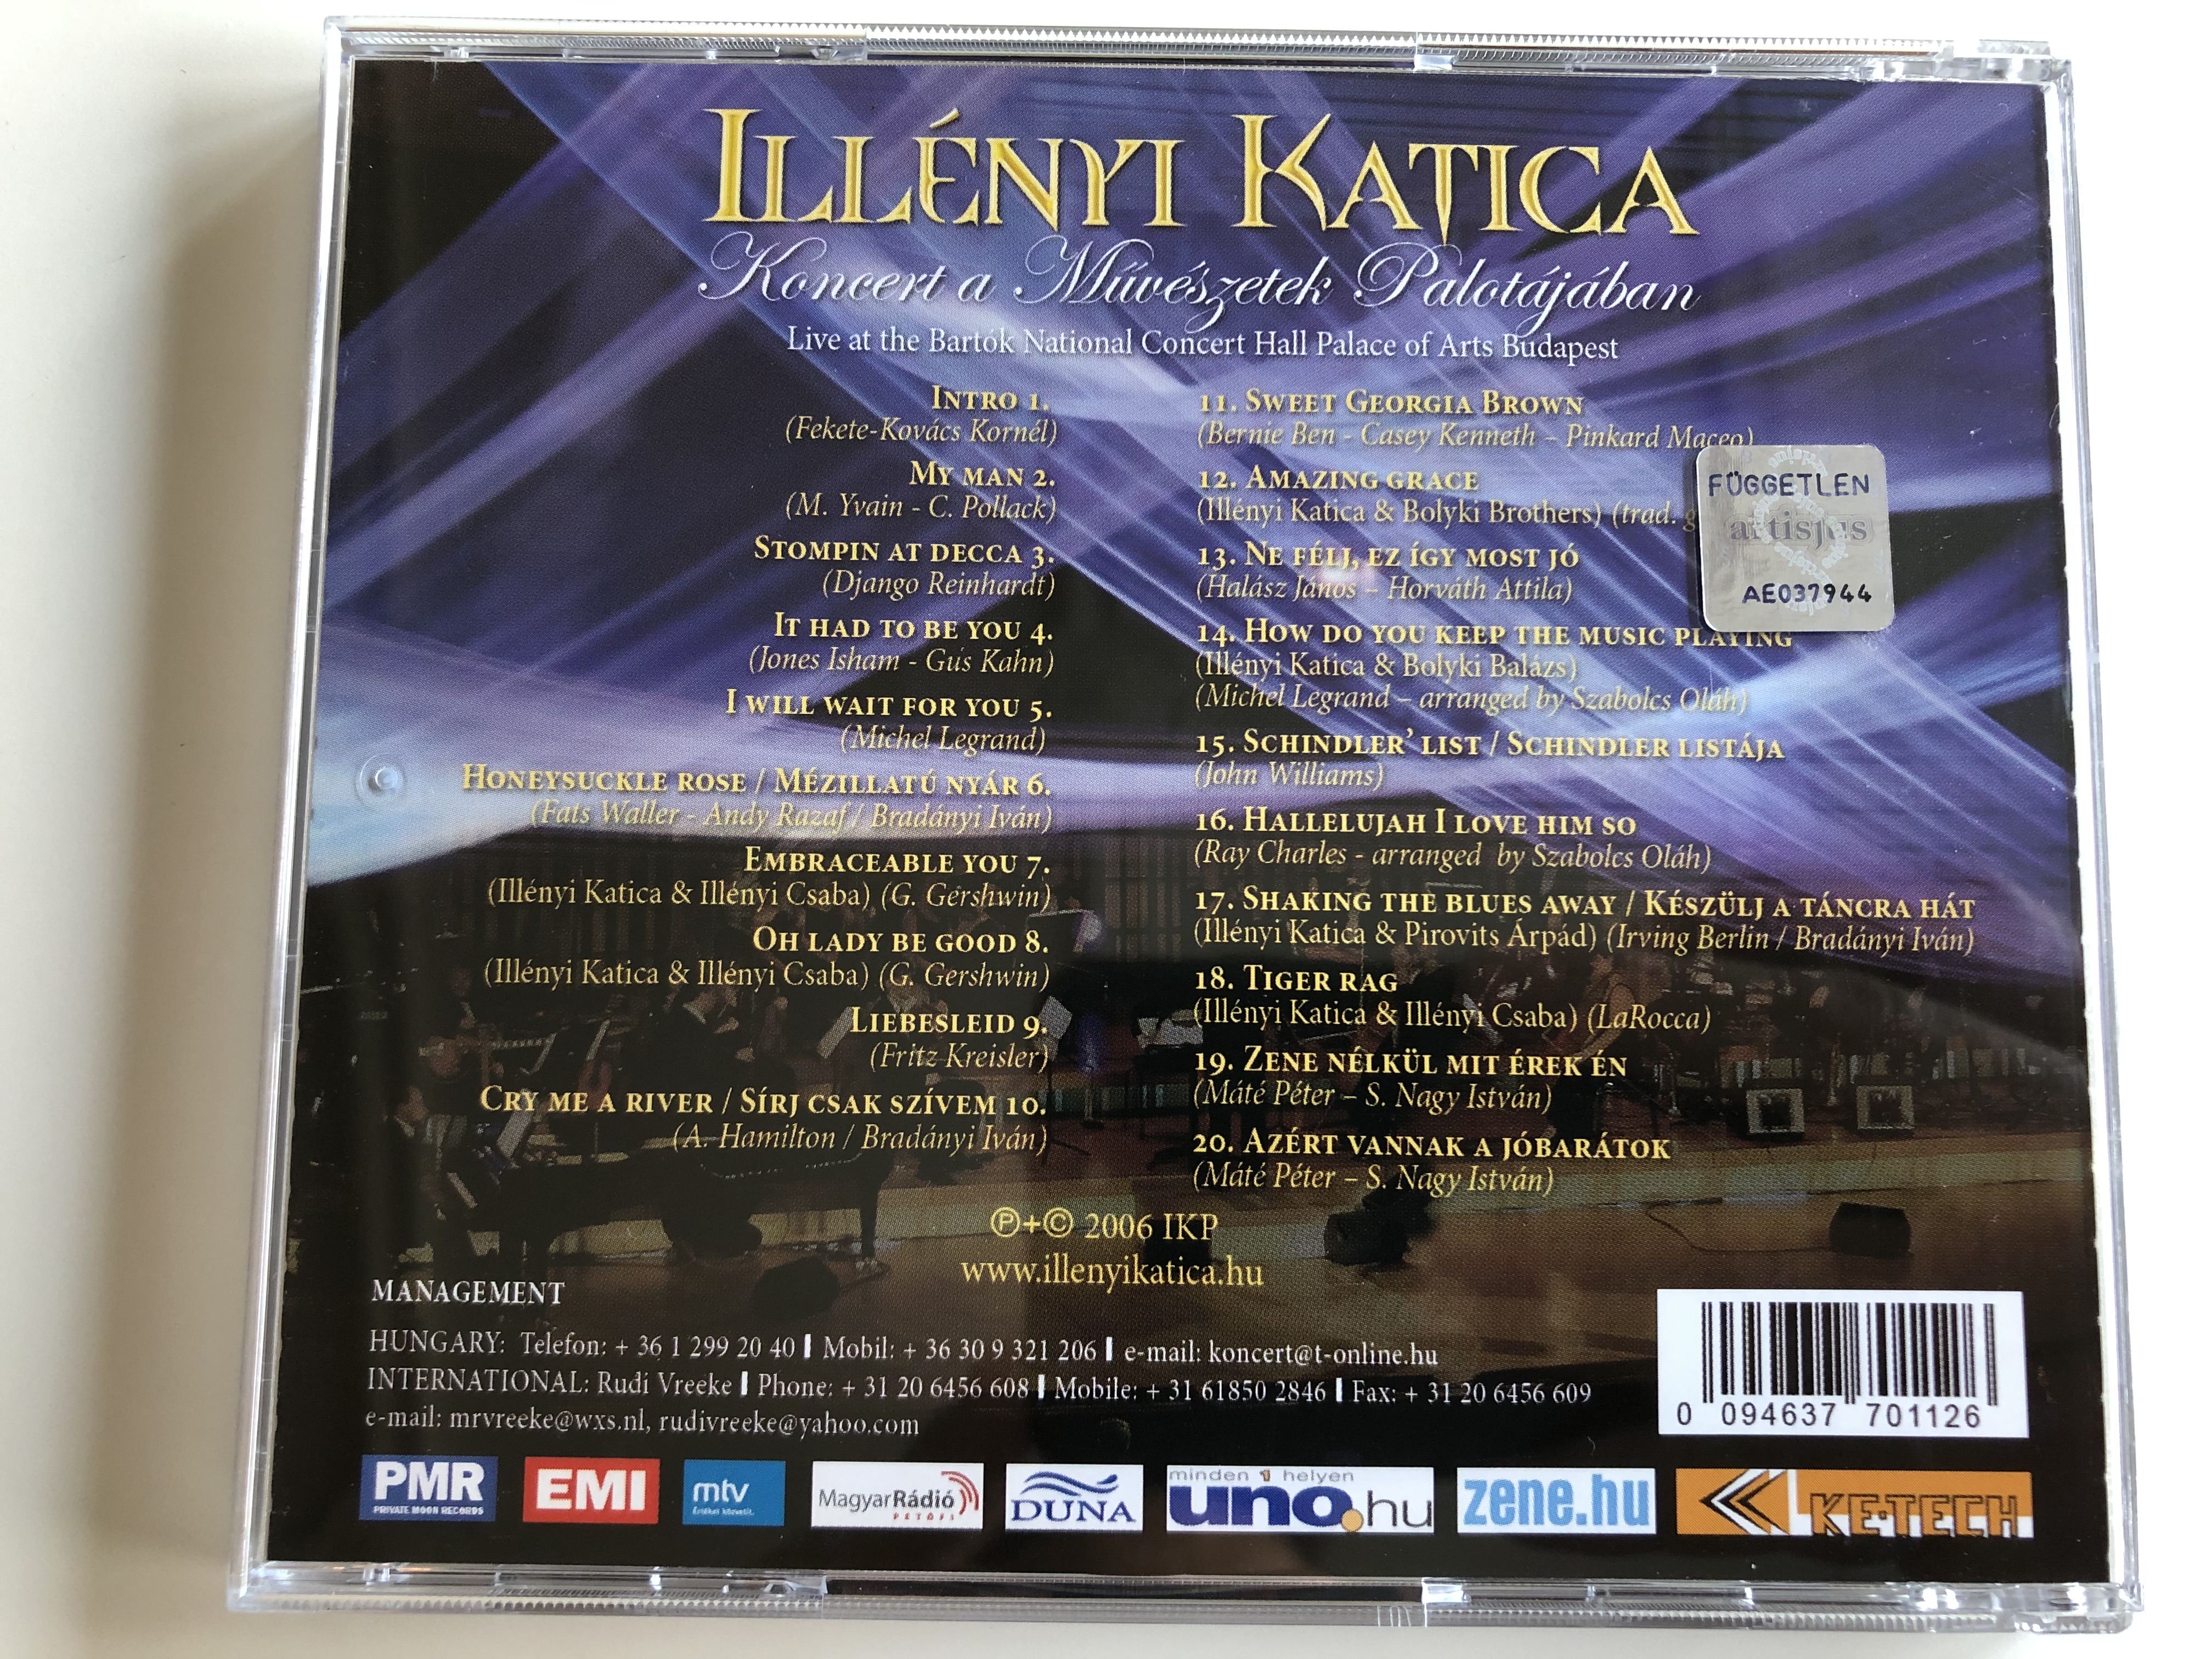 ill-nyi-katica-live-at-the-national-concert-hall-palace-of-arts-budapest-koncert-a-m-v-szetek-palot-j-ban-audio-cd-2006-ikp-4-.jpg